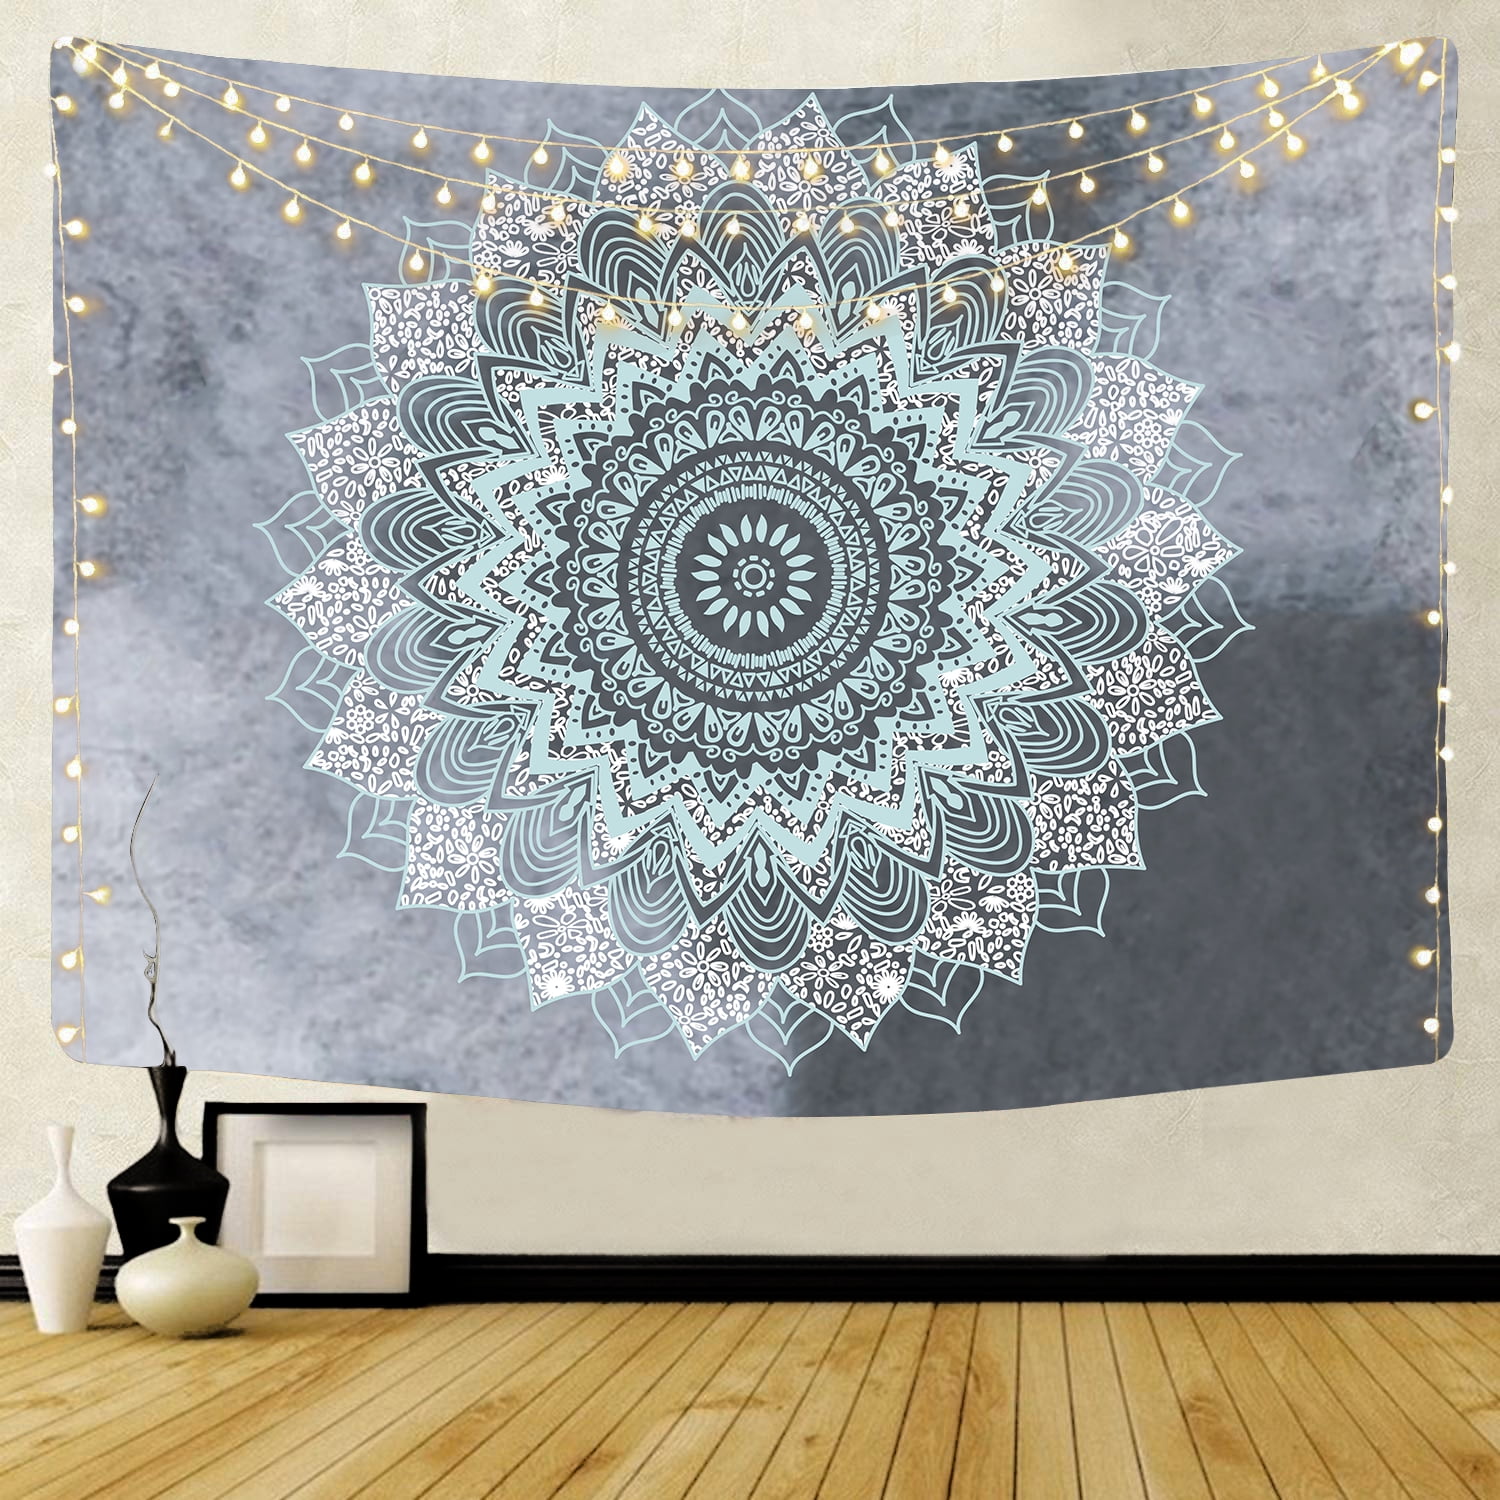 Polyester Home Wall Tapestry Blanket Hanging Mandala Decor Art Pattern 